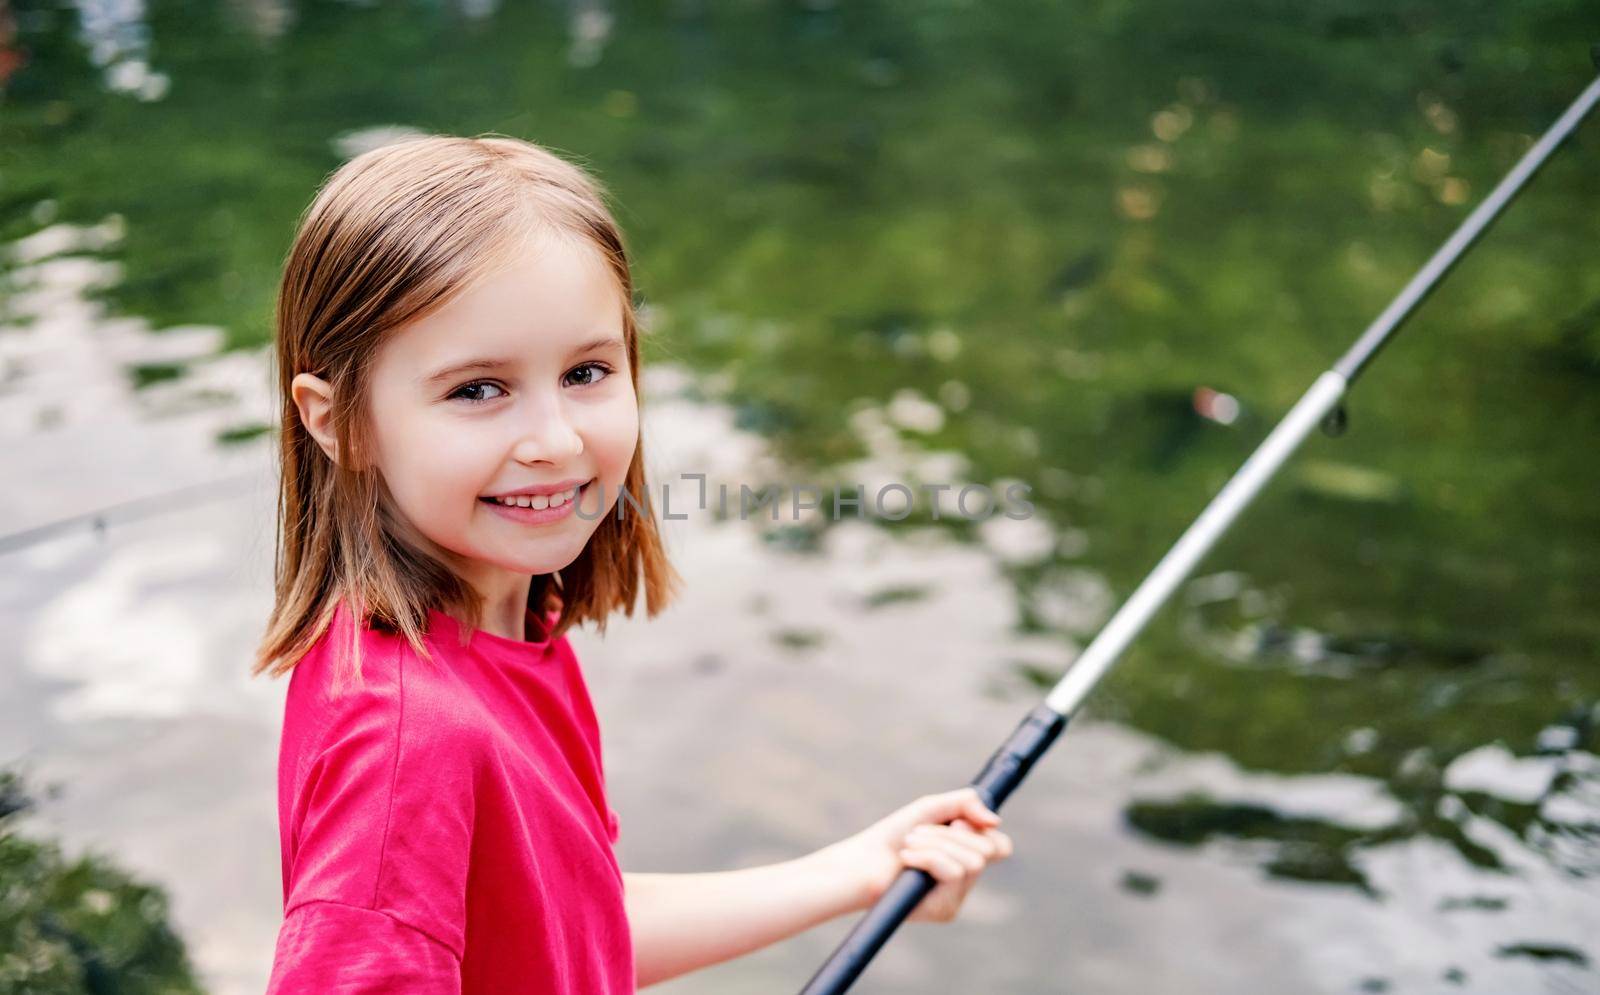 Little girl holding fishing rod on pond background